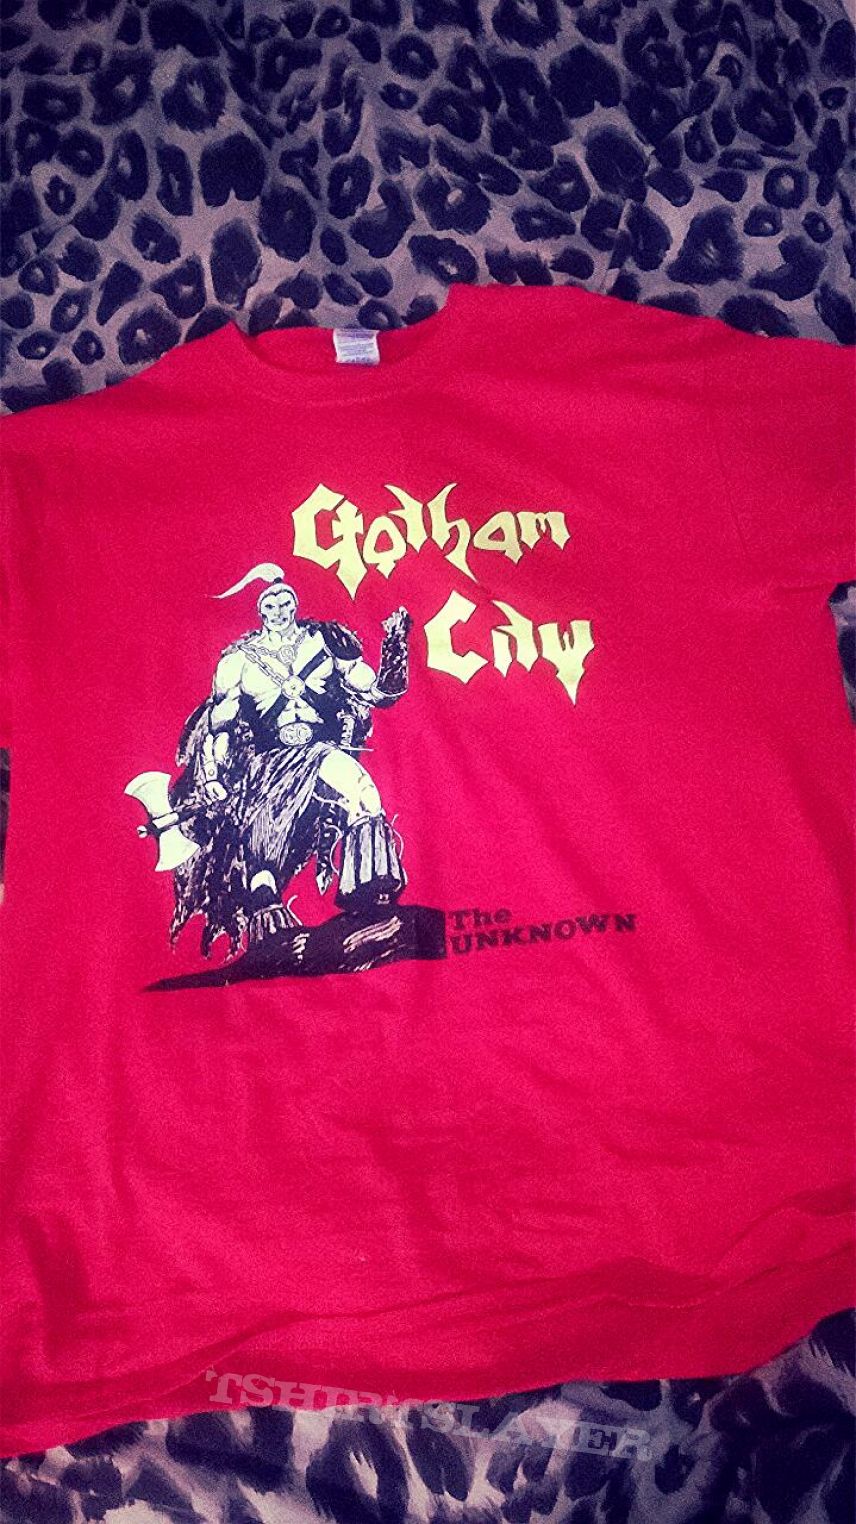 Gotham City shirt